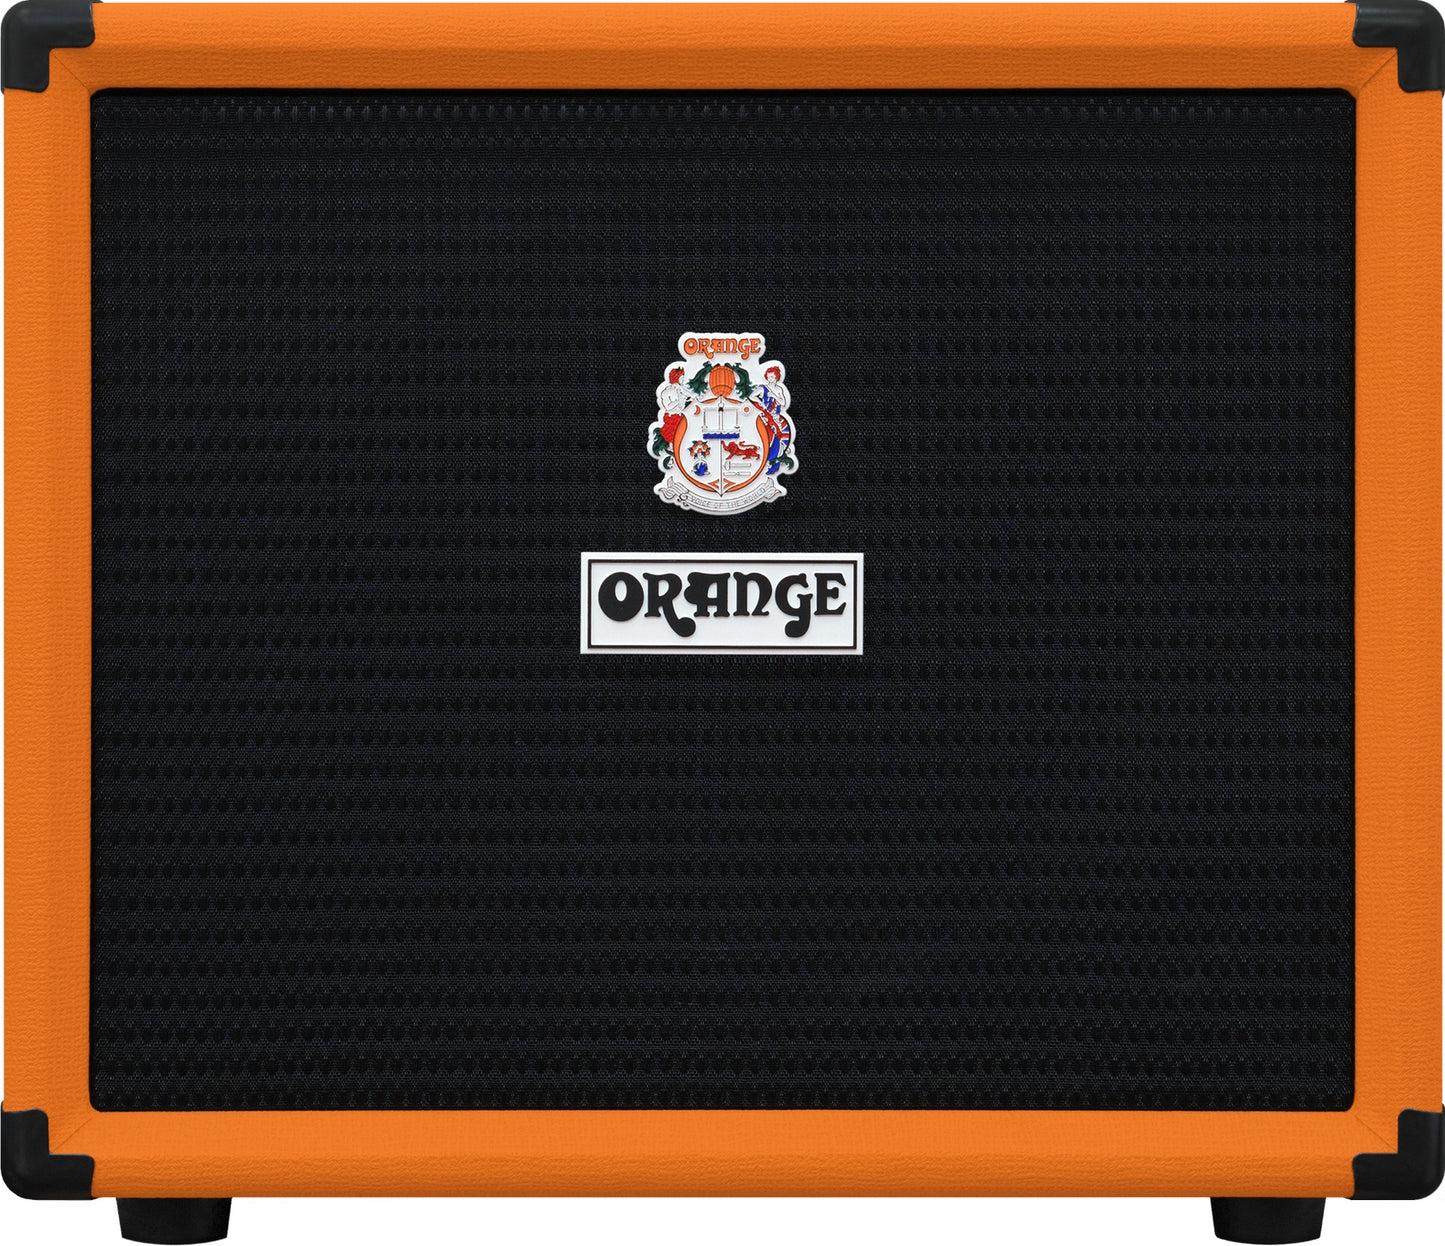 Orange OBC112 Bass Cabinet